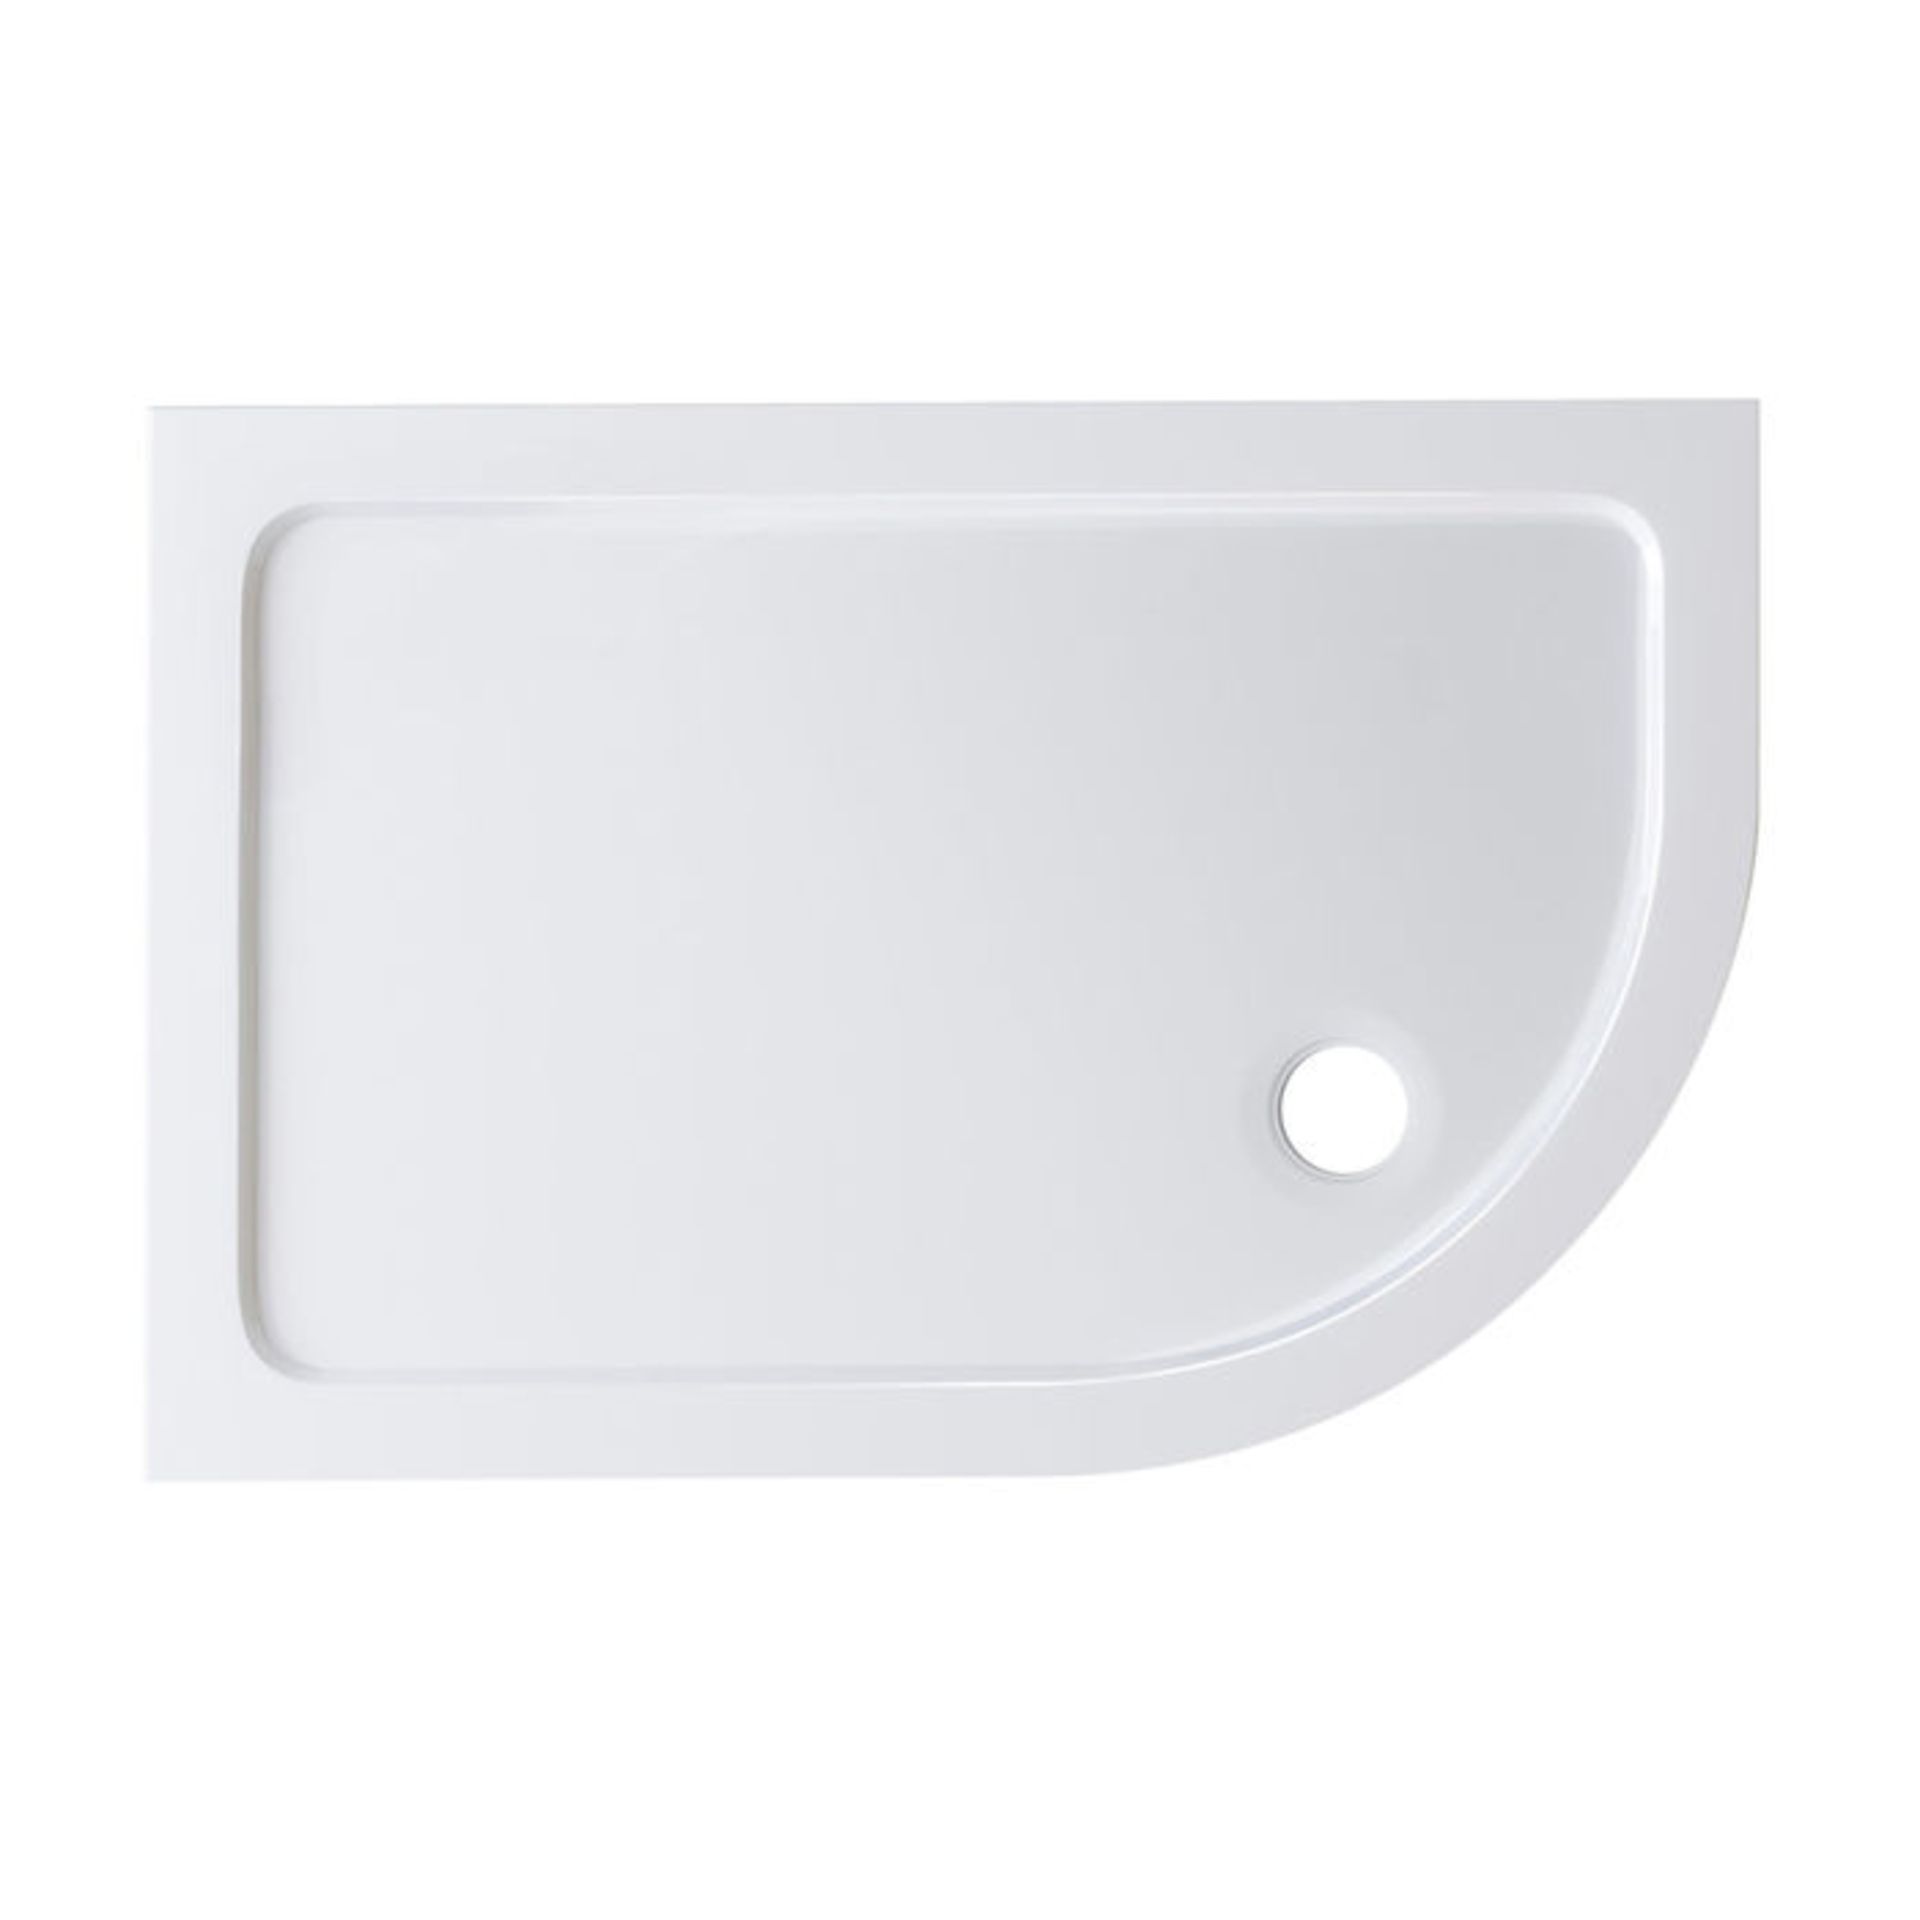 (NY147) 1200x800mm Offset Quadrant Ultra Slim Stone Shower Tray - Right. Low profile ultra slim